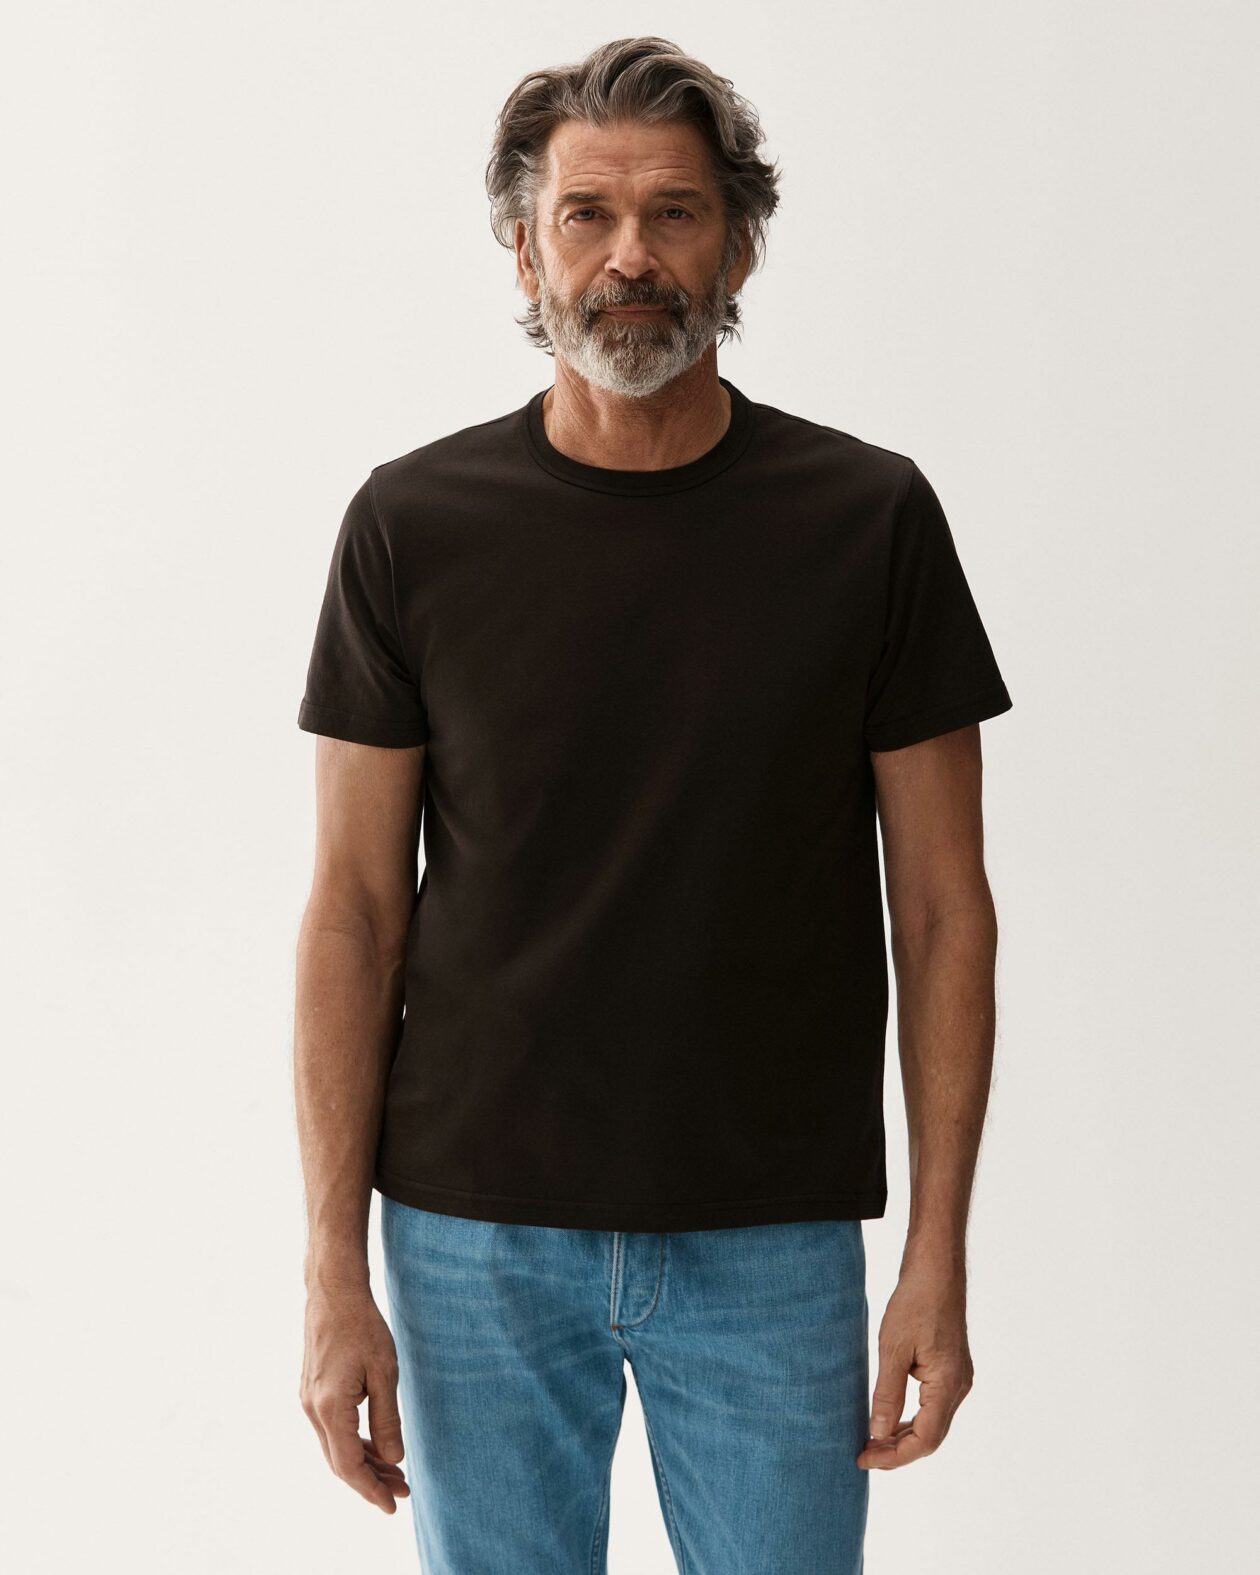 Dark Brown mercerized cotton T-shirt